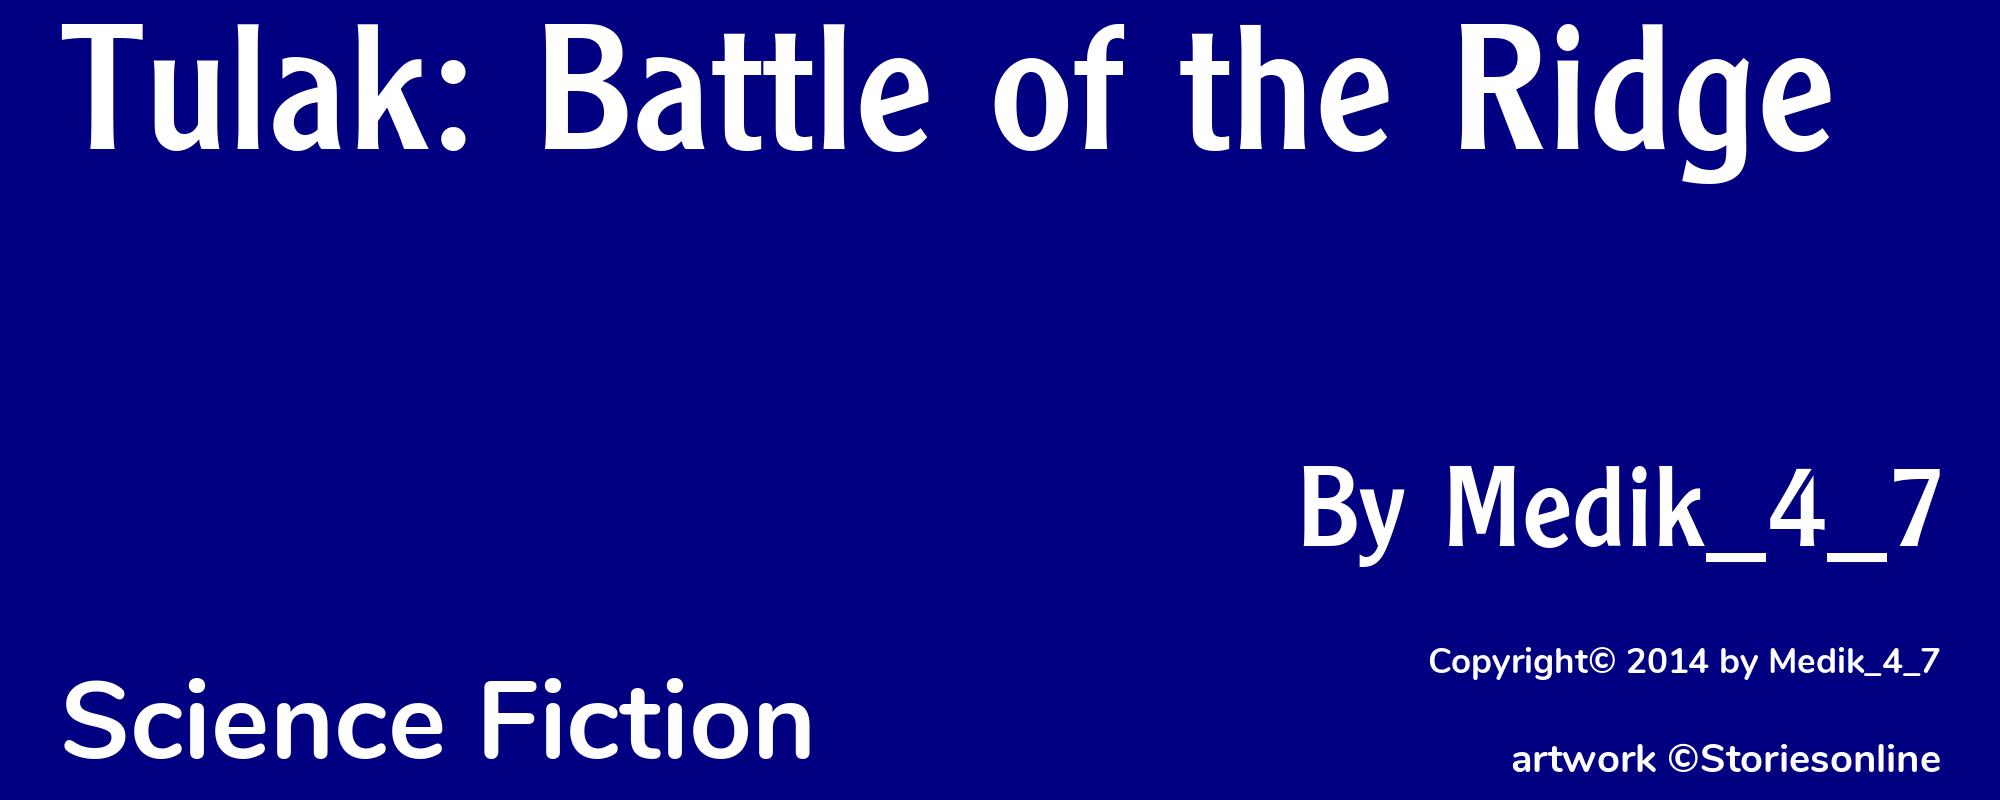 Tulak: Battle of the Ridge - Cover